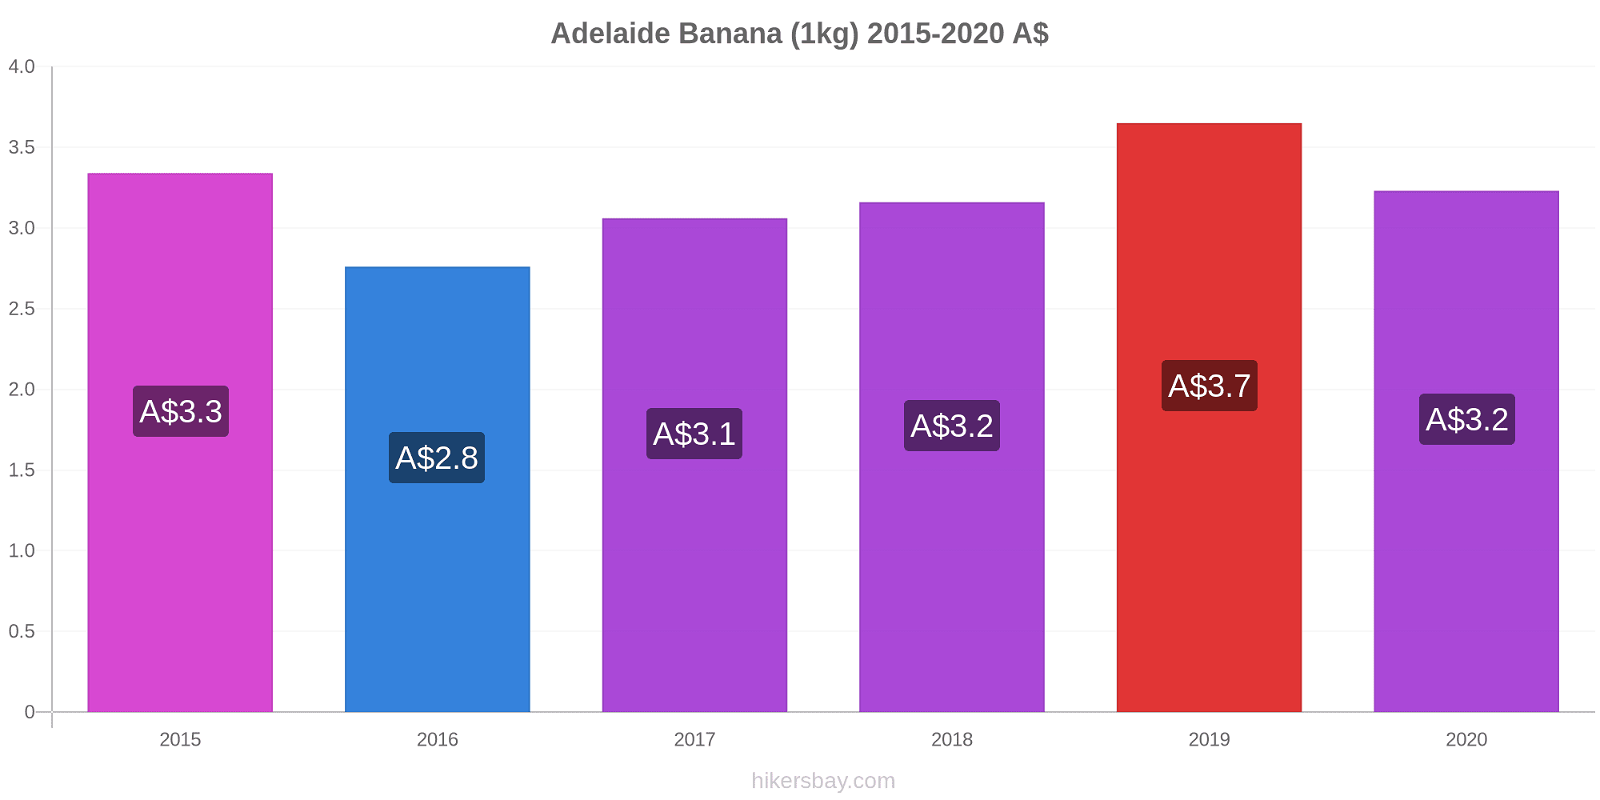 Adelaide modificări de preț Banana (1kg) hikersbay.com